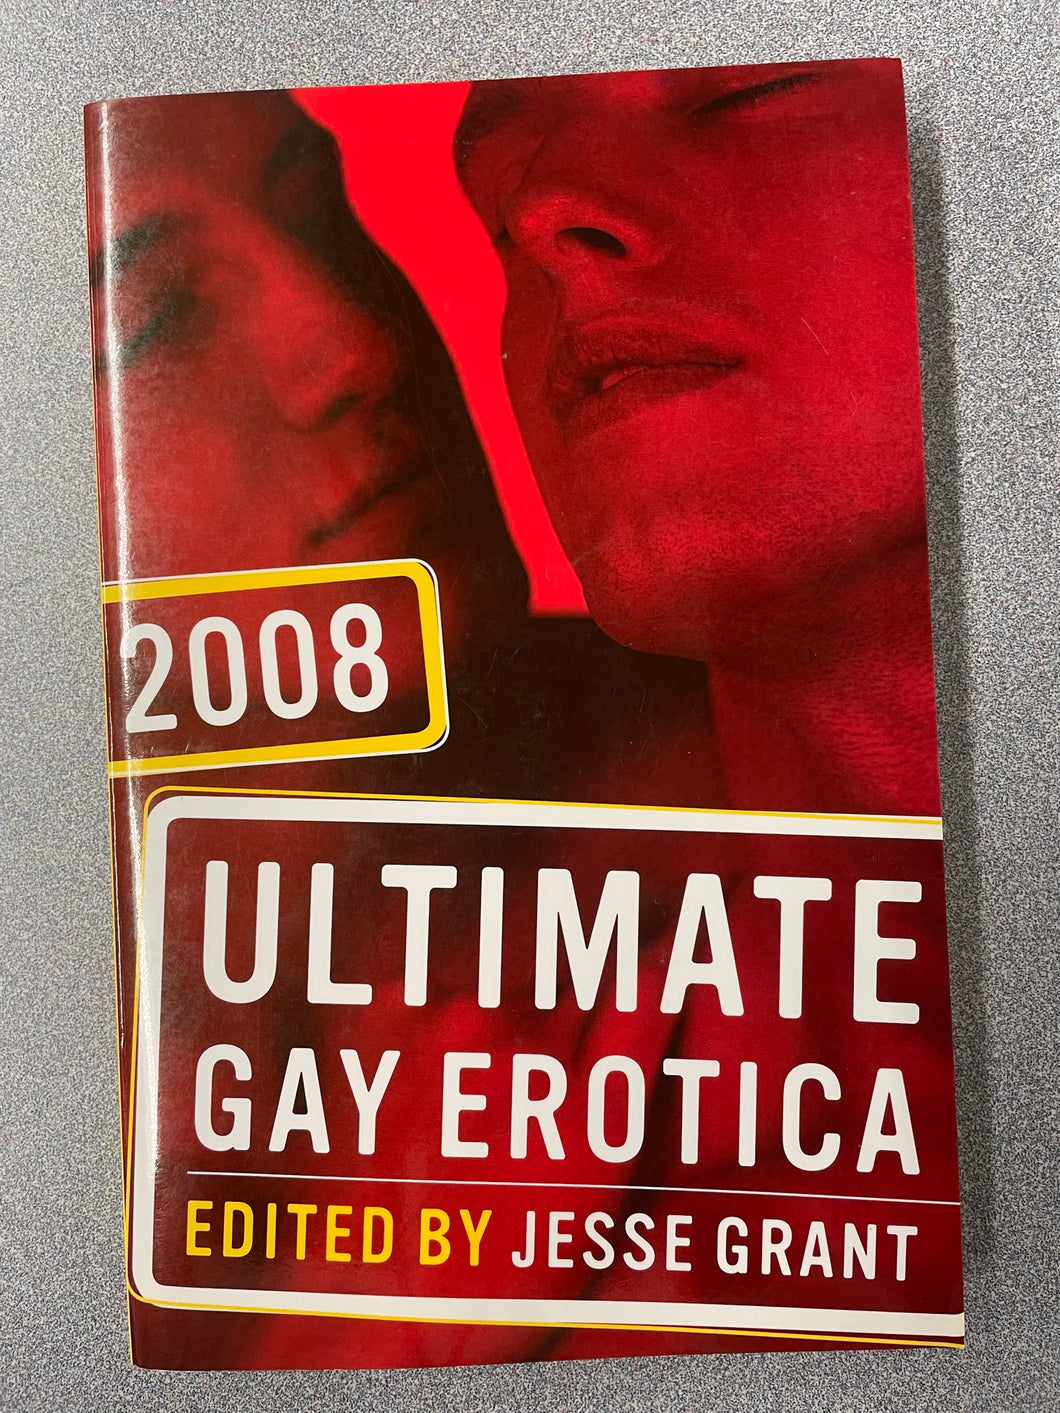 Ultimate Gay Erotica 2008, Grant, Jesse, ed. [2007] ER 7/23